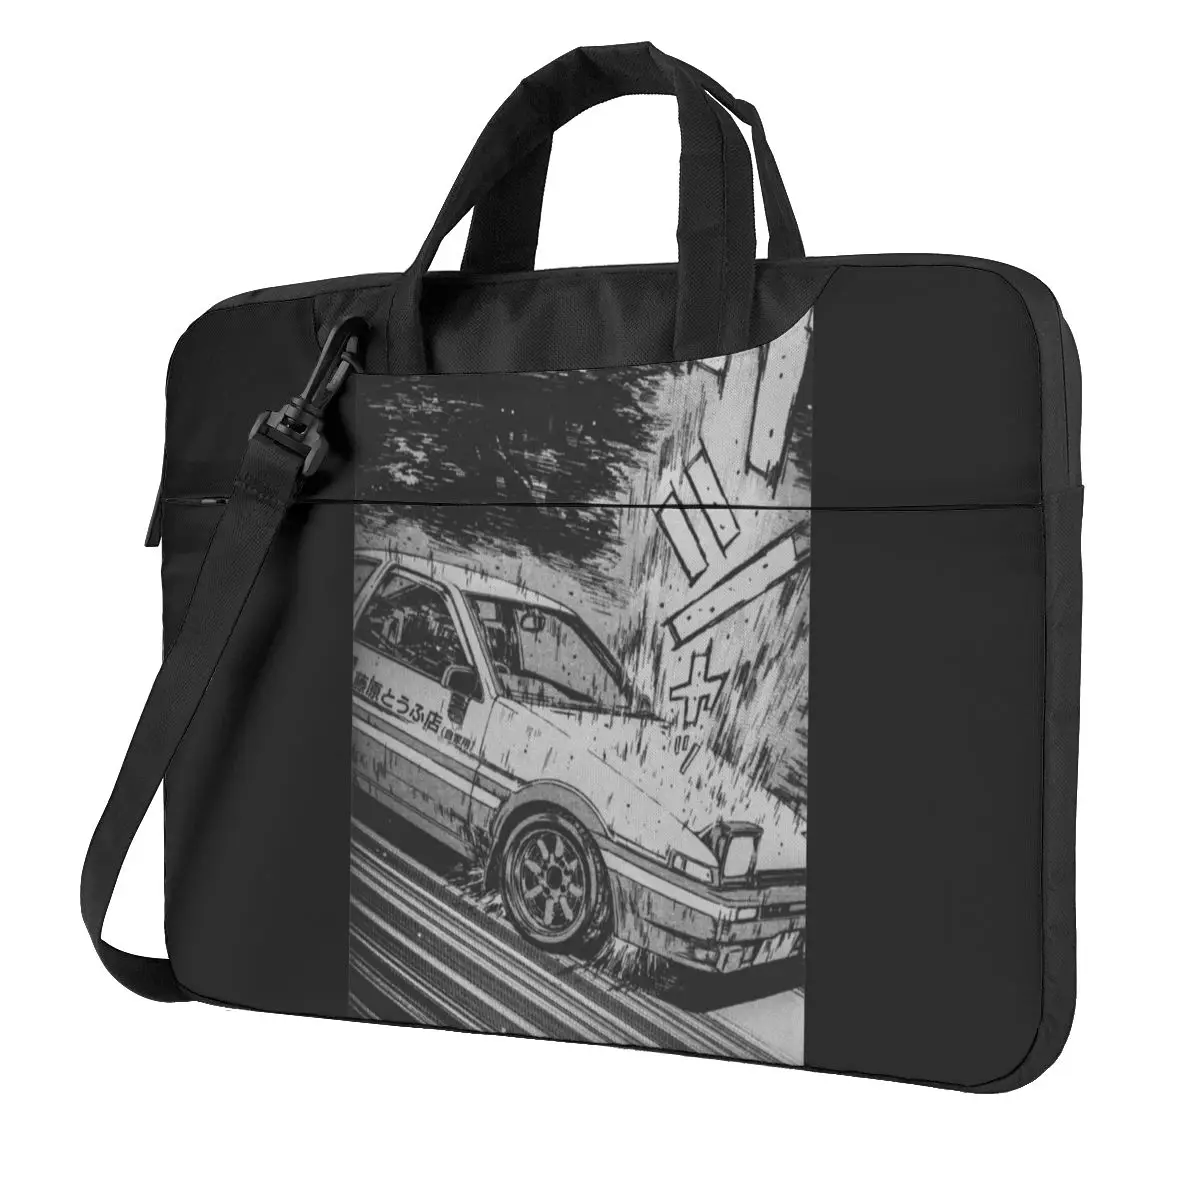 Initial D AE86 Drifting Car Laptop Bag Case Anime Race Clutch Carry Computer Bag Soft Travel Laptop Pouch